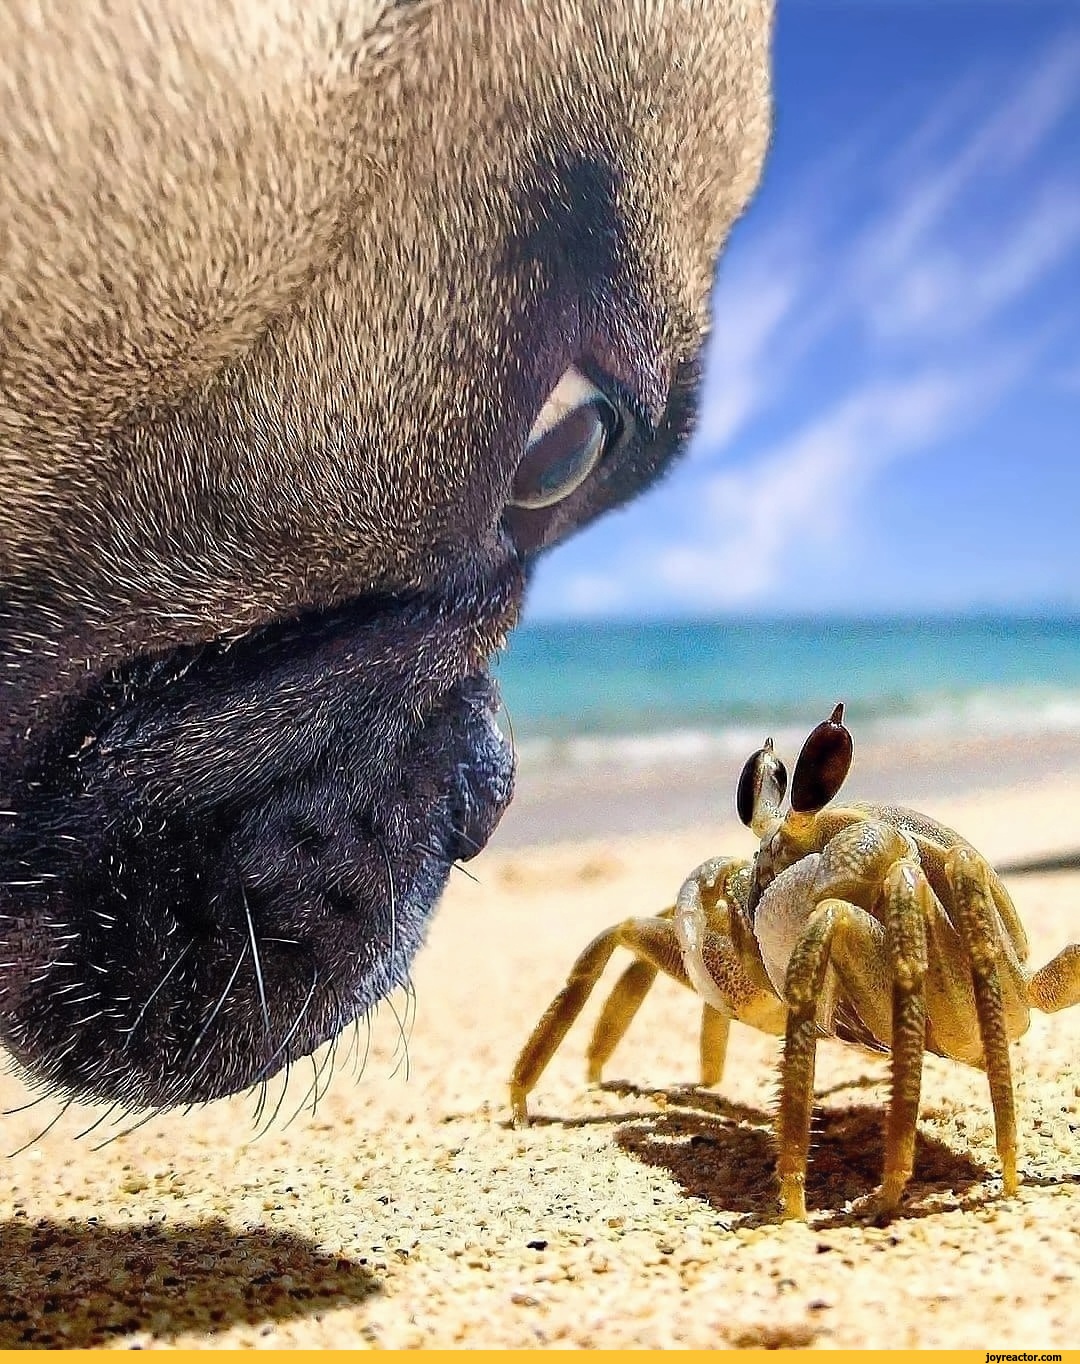 crab-dog-curiosity-funny-6830778.jpeg